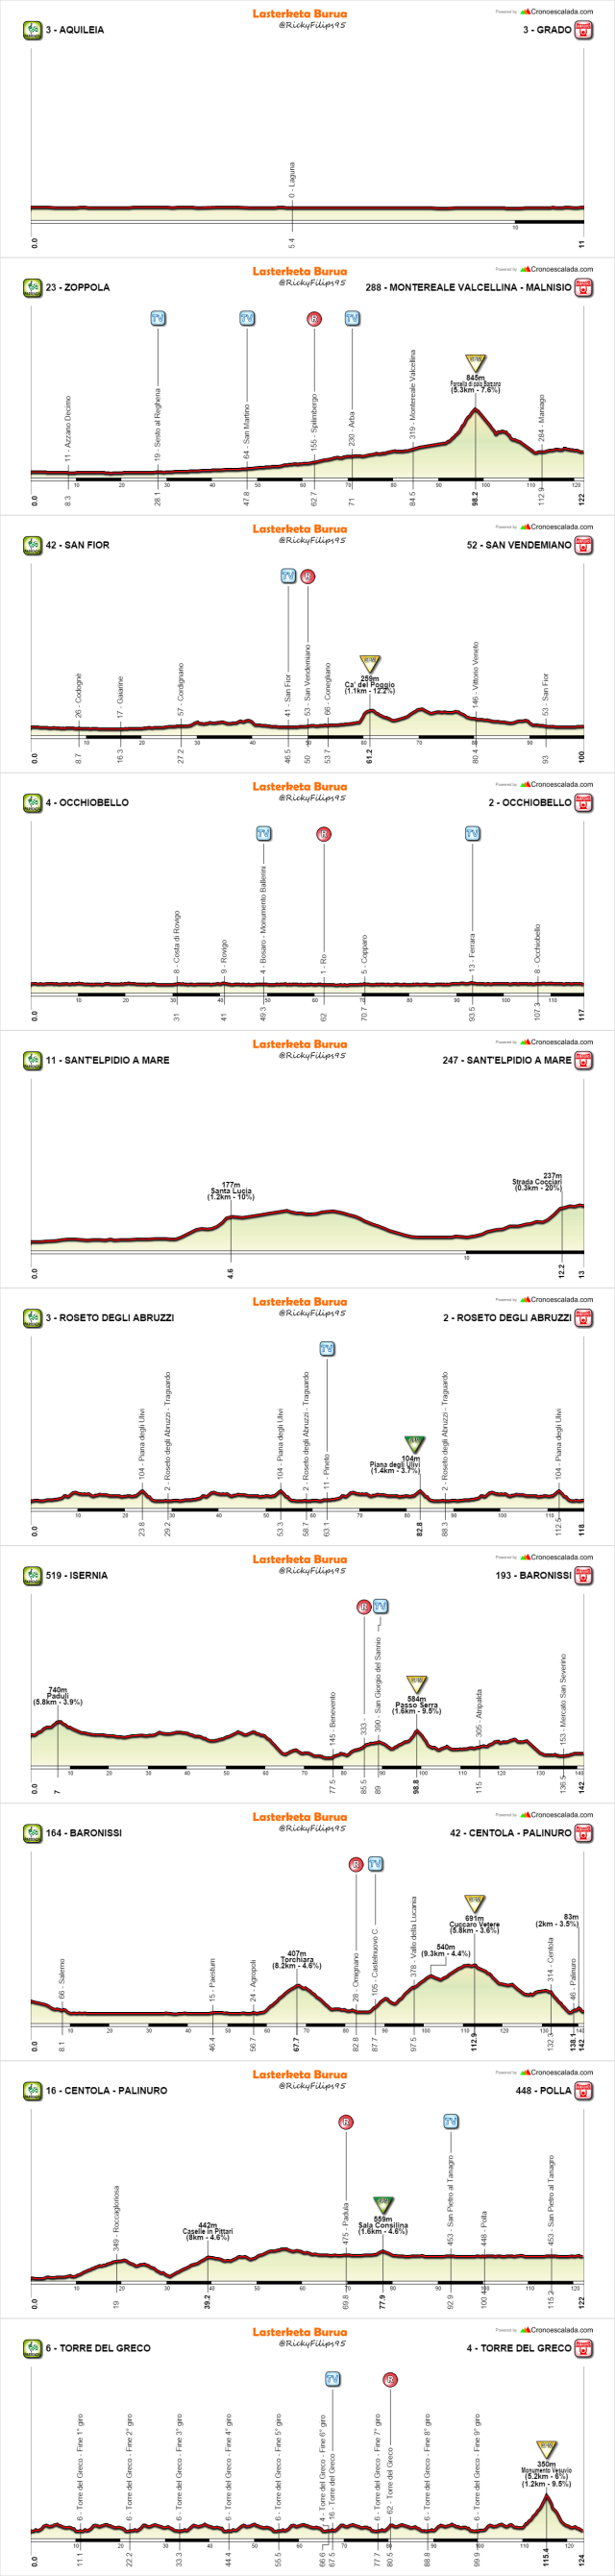 Giro Rosa 2017 - Profili